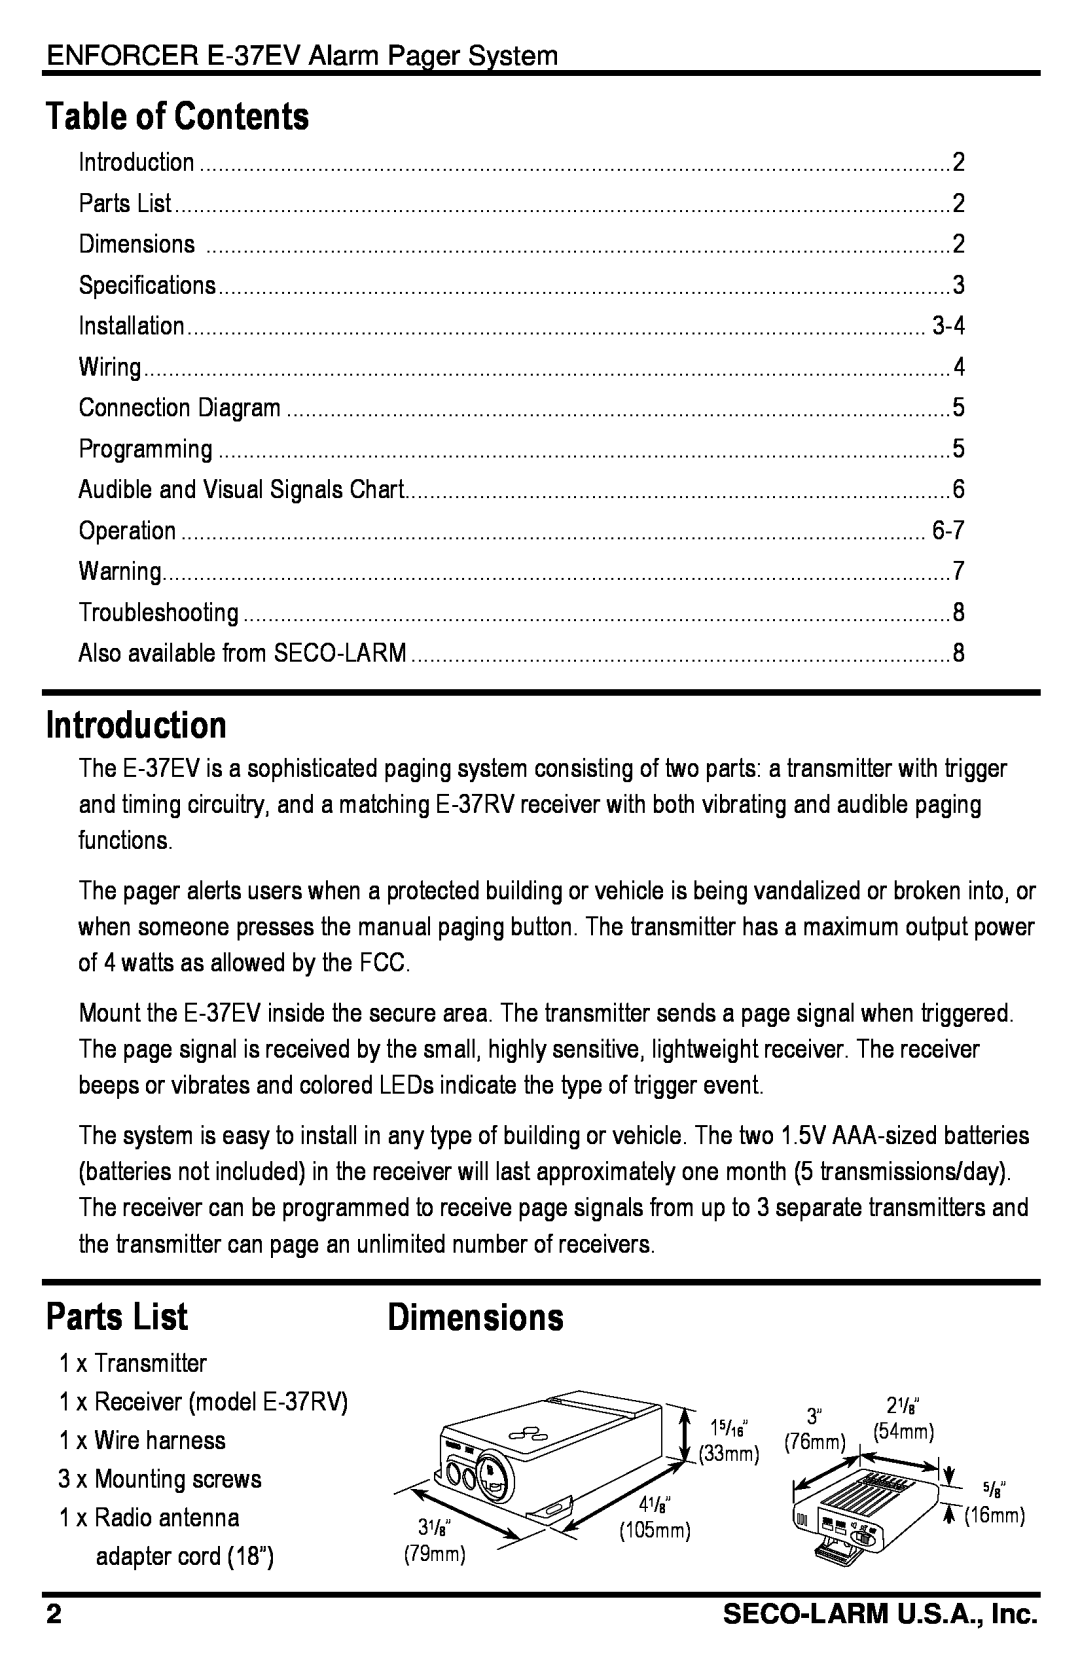 SECO-LARM USA E-37EV manual Table of Contents, Introduction, Parts List, Dimensions, SECO-LARMU.S.A., Inc 